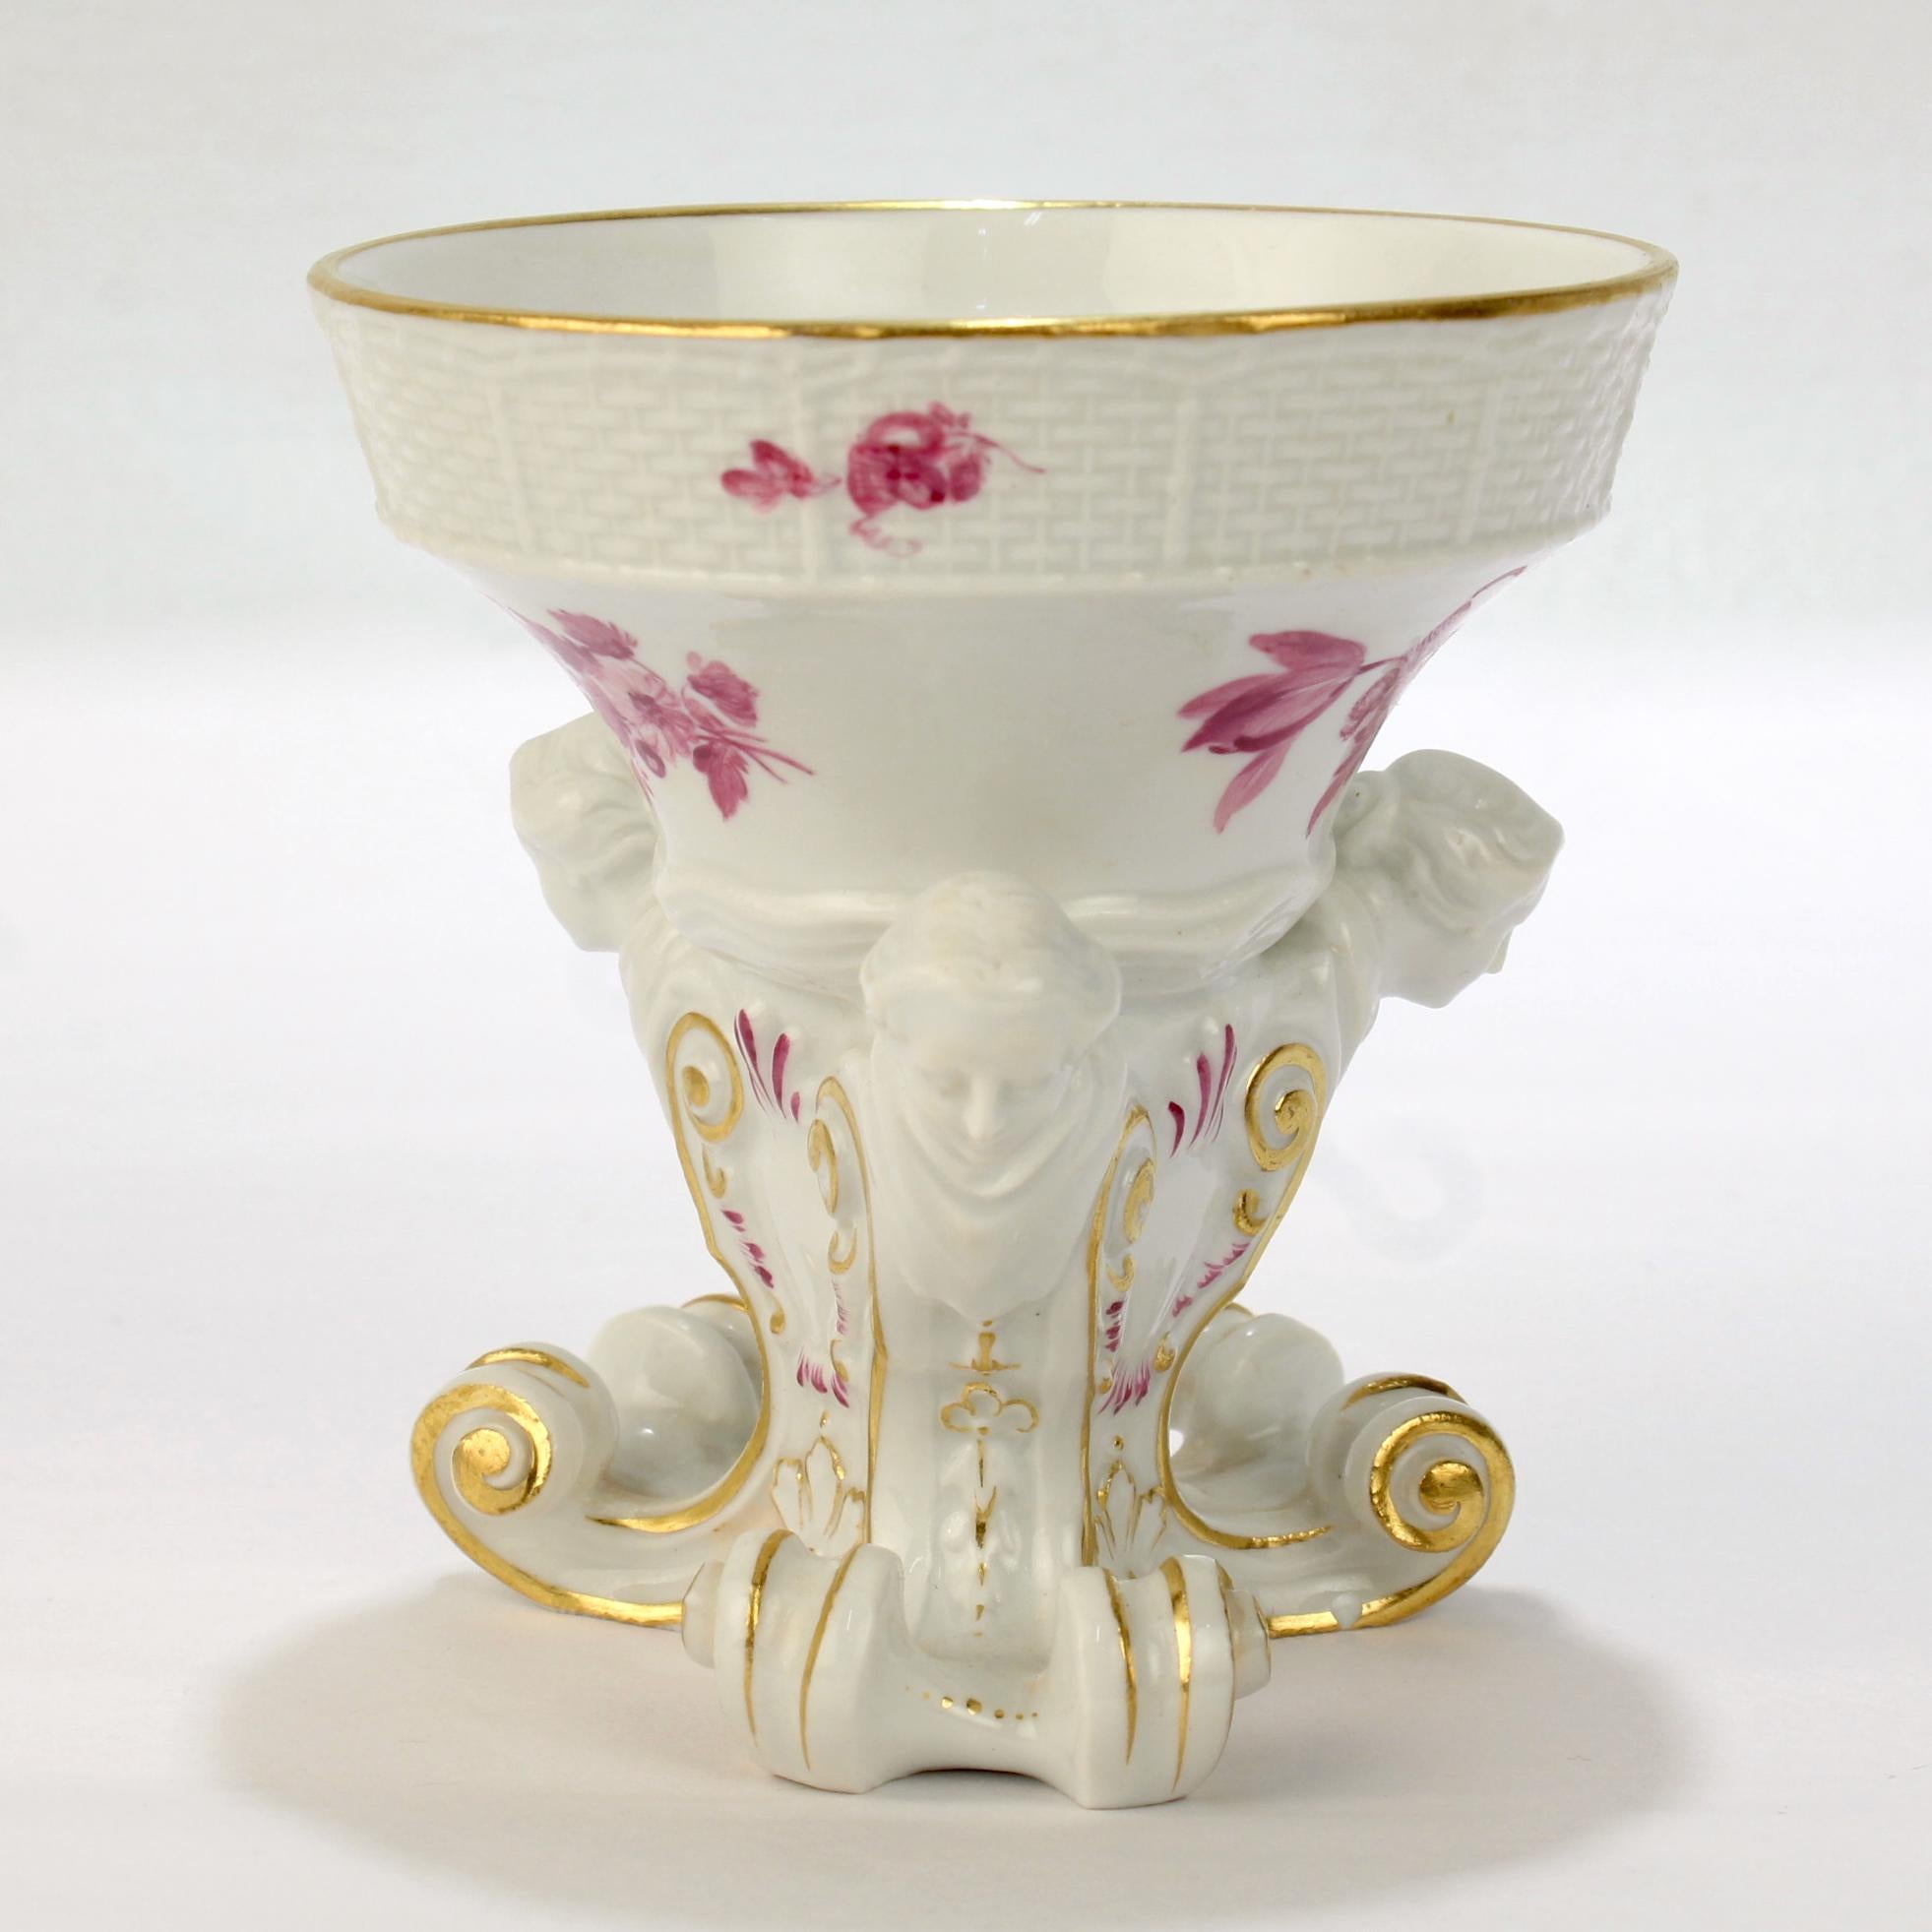 4 Antique Meissen Porcelain Footed Frauenkopf Salt Cellars with Puce Flowers For Sale 5